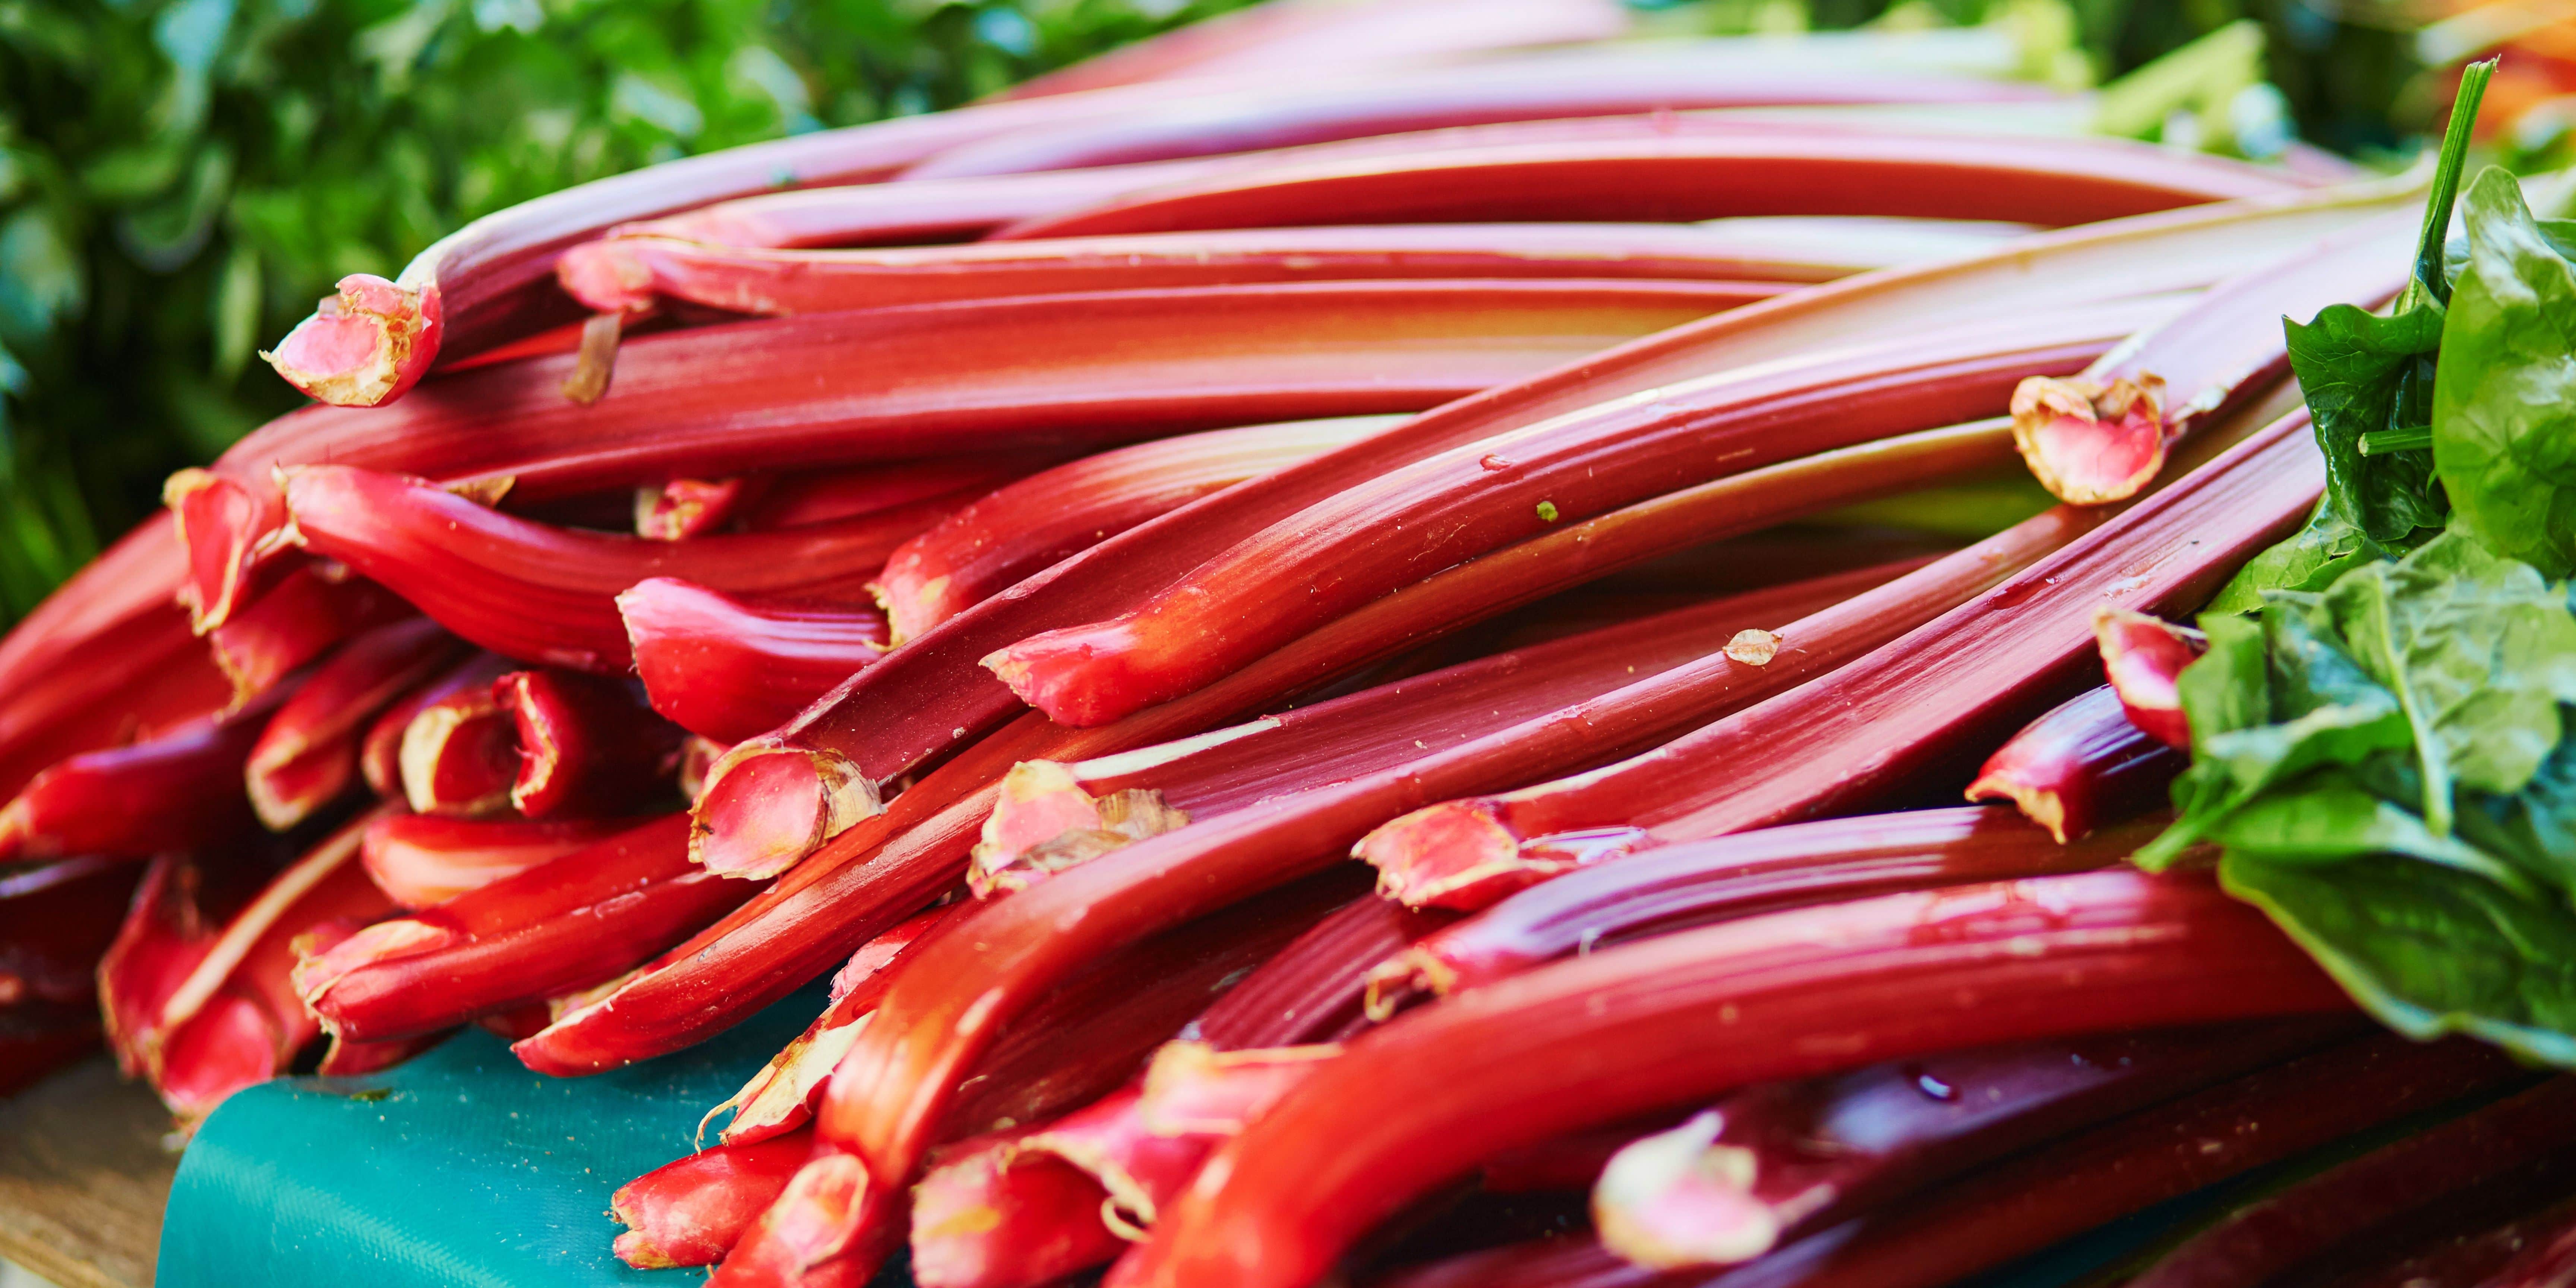 Fresh Produce: Rhubarb Stems